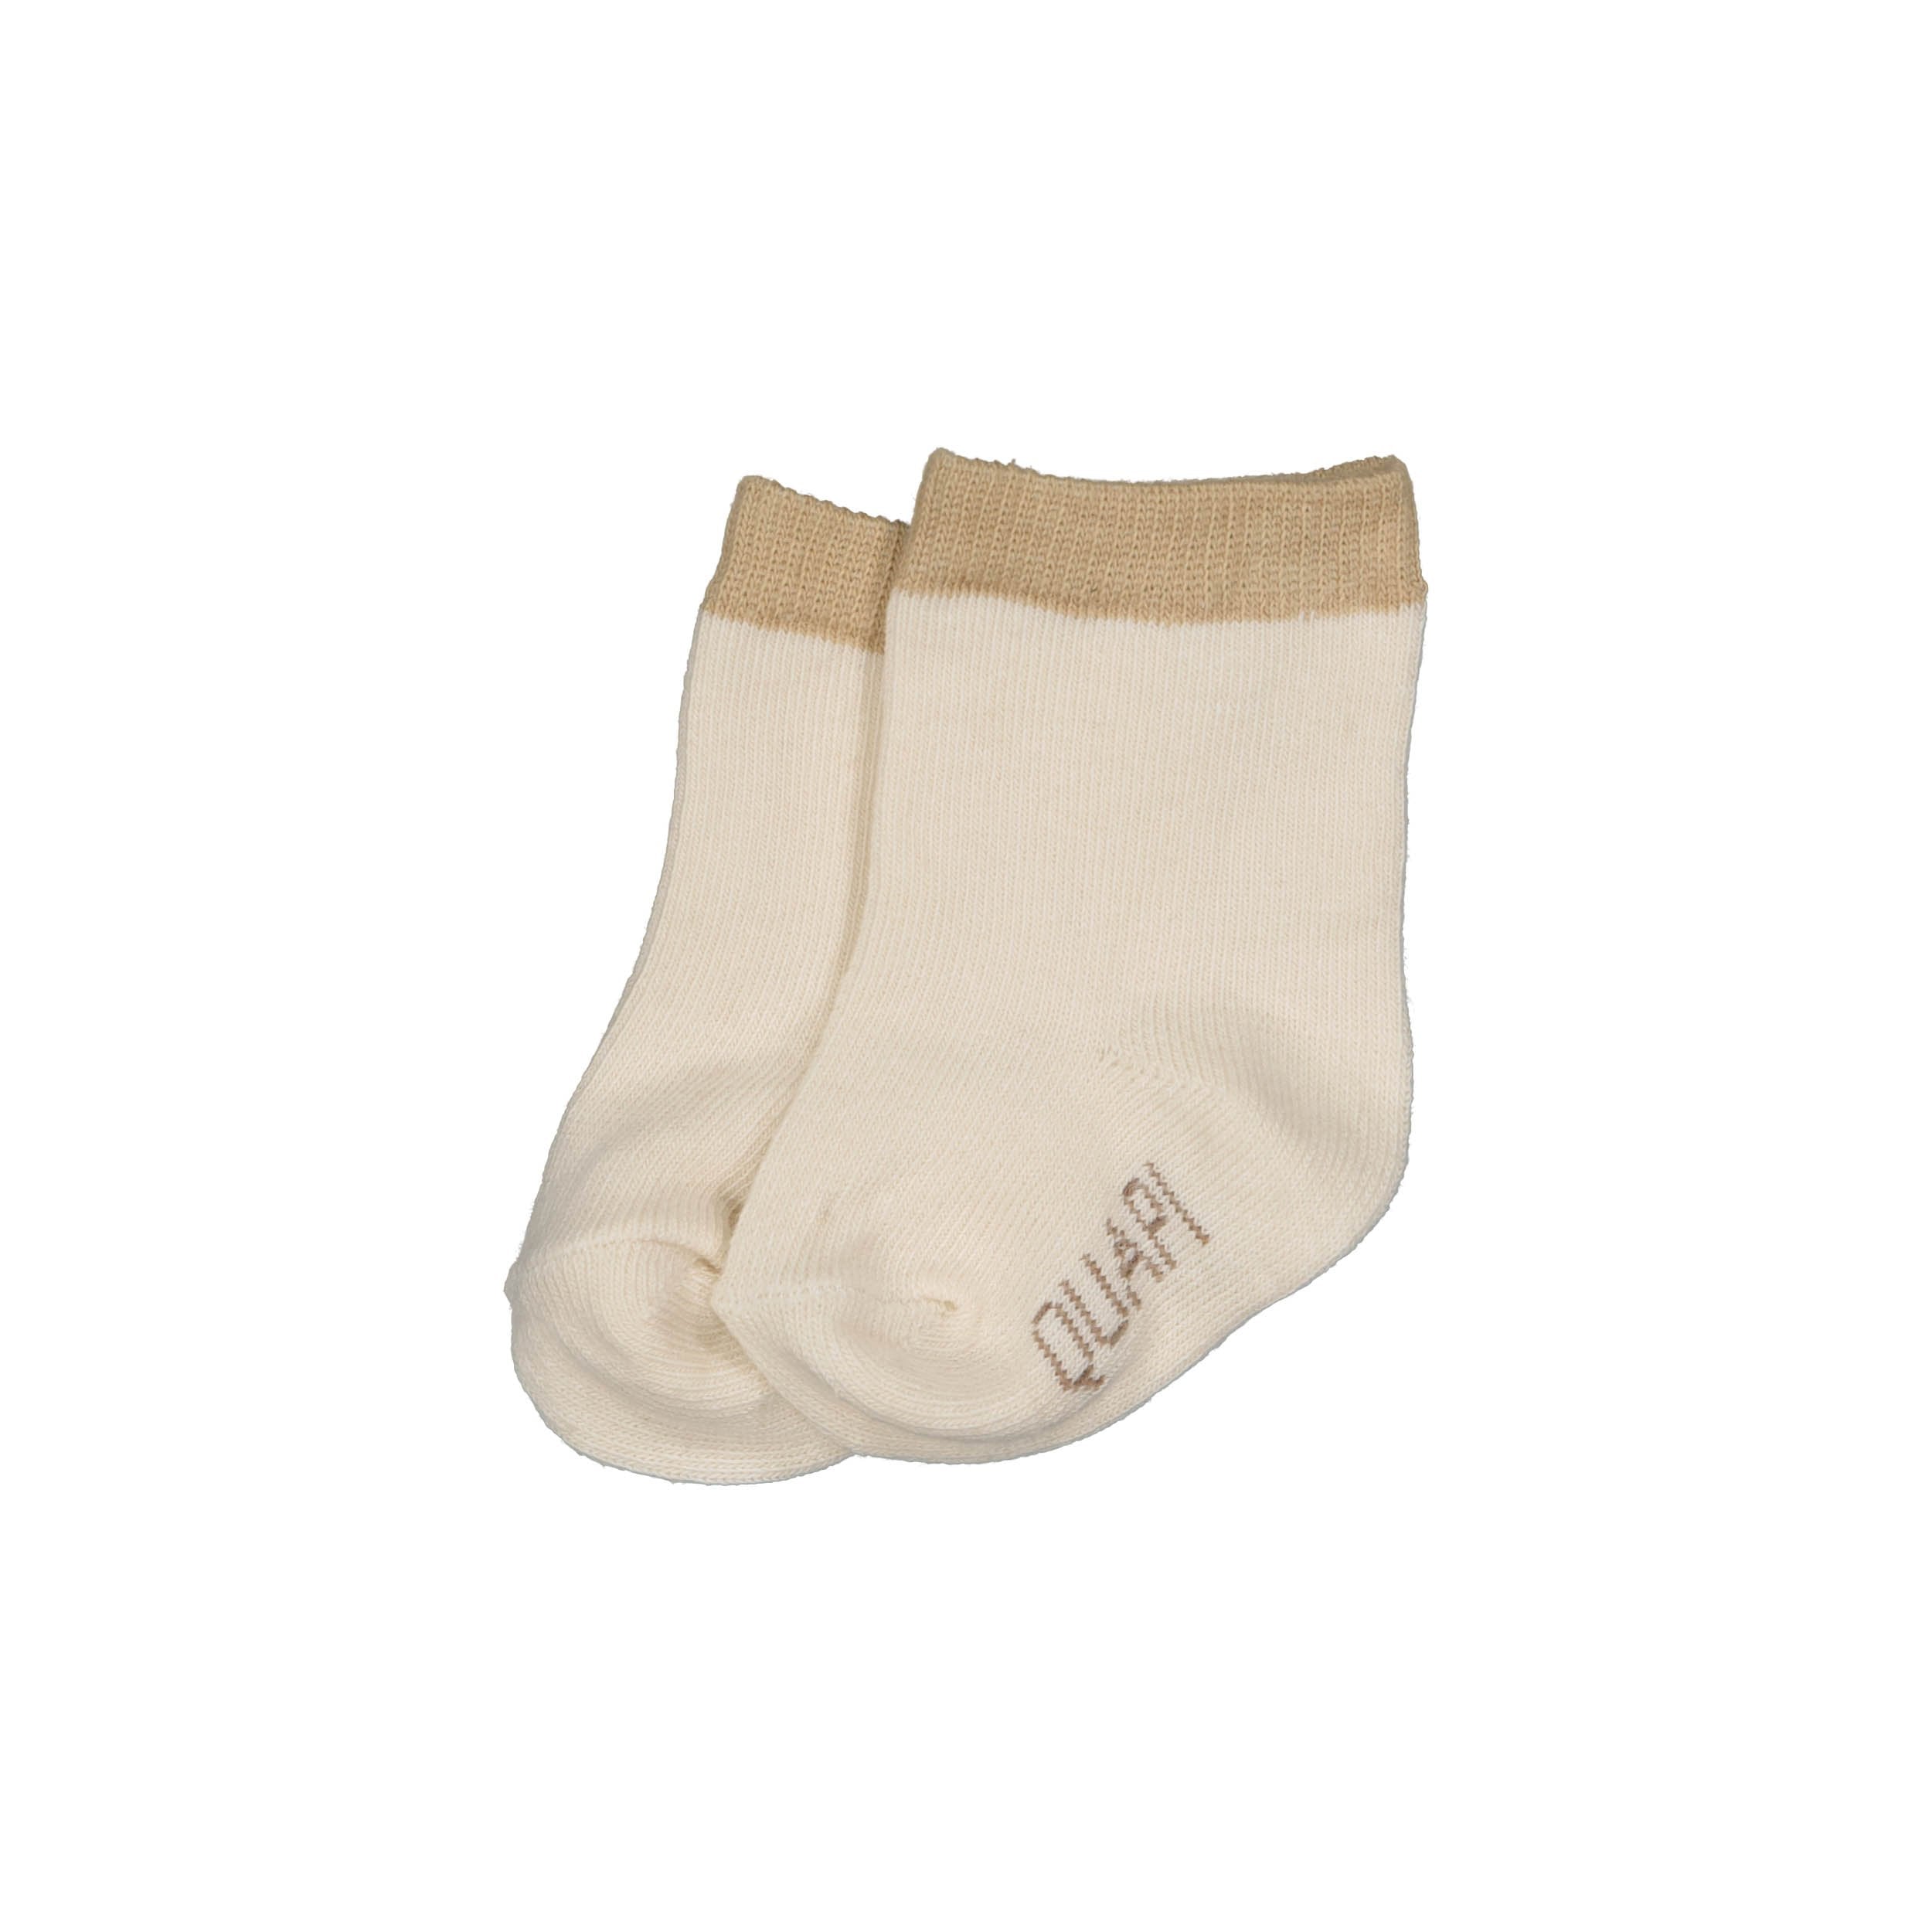 Unisexs Socks MO NBW21 van Quapi Newborn in de kleur Off White in maat ONESIZE.